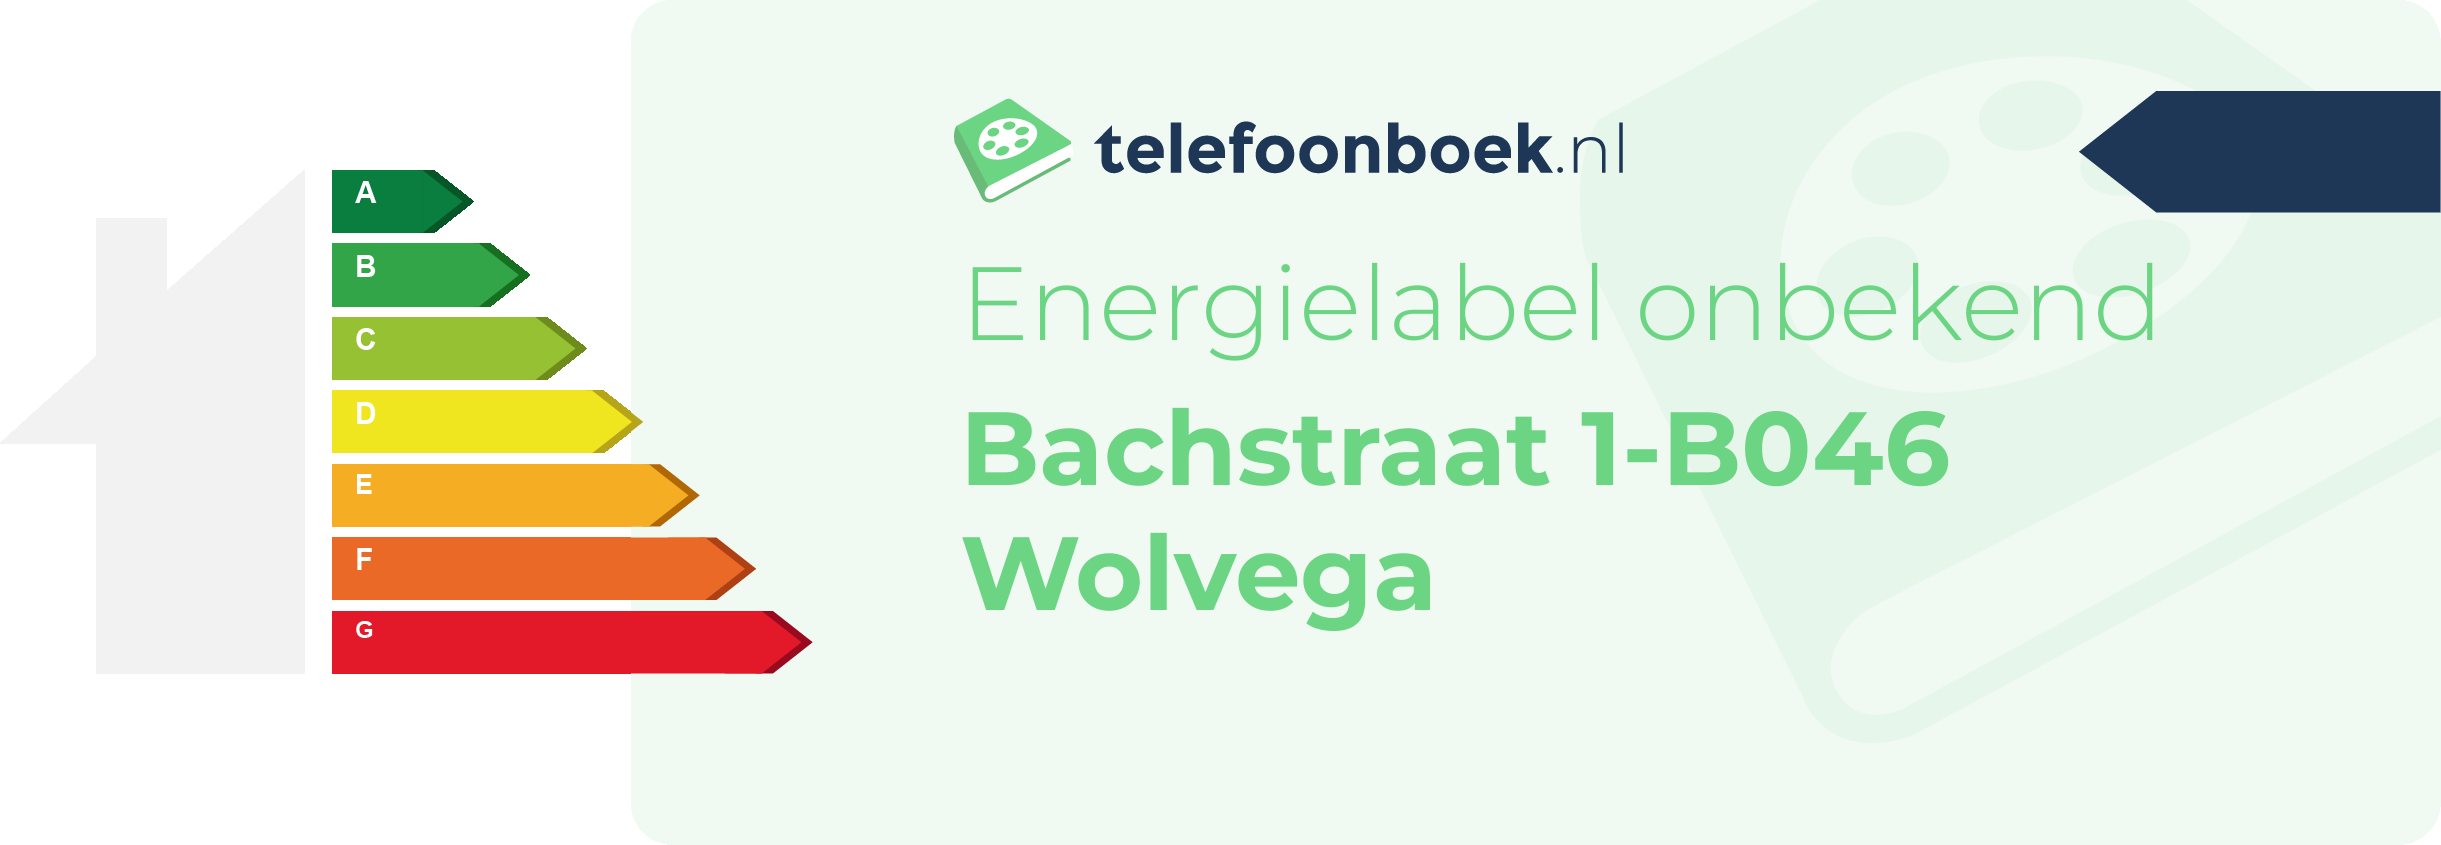 Energielabel Bachstraat 1-B046 Wolvega